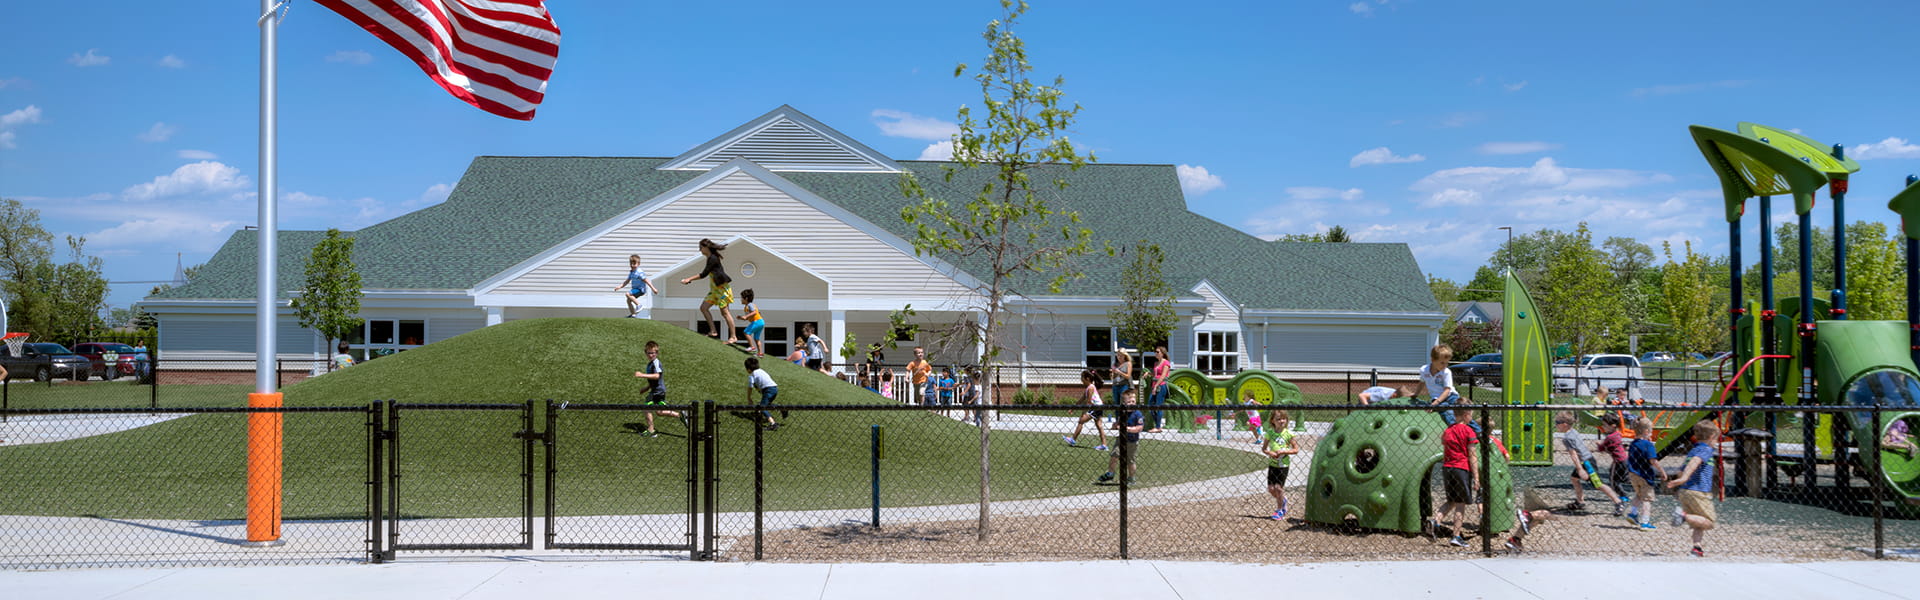 Novi Community School District playground.